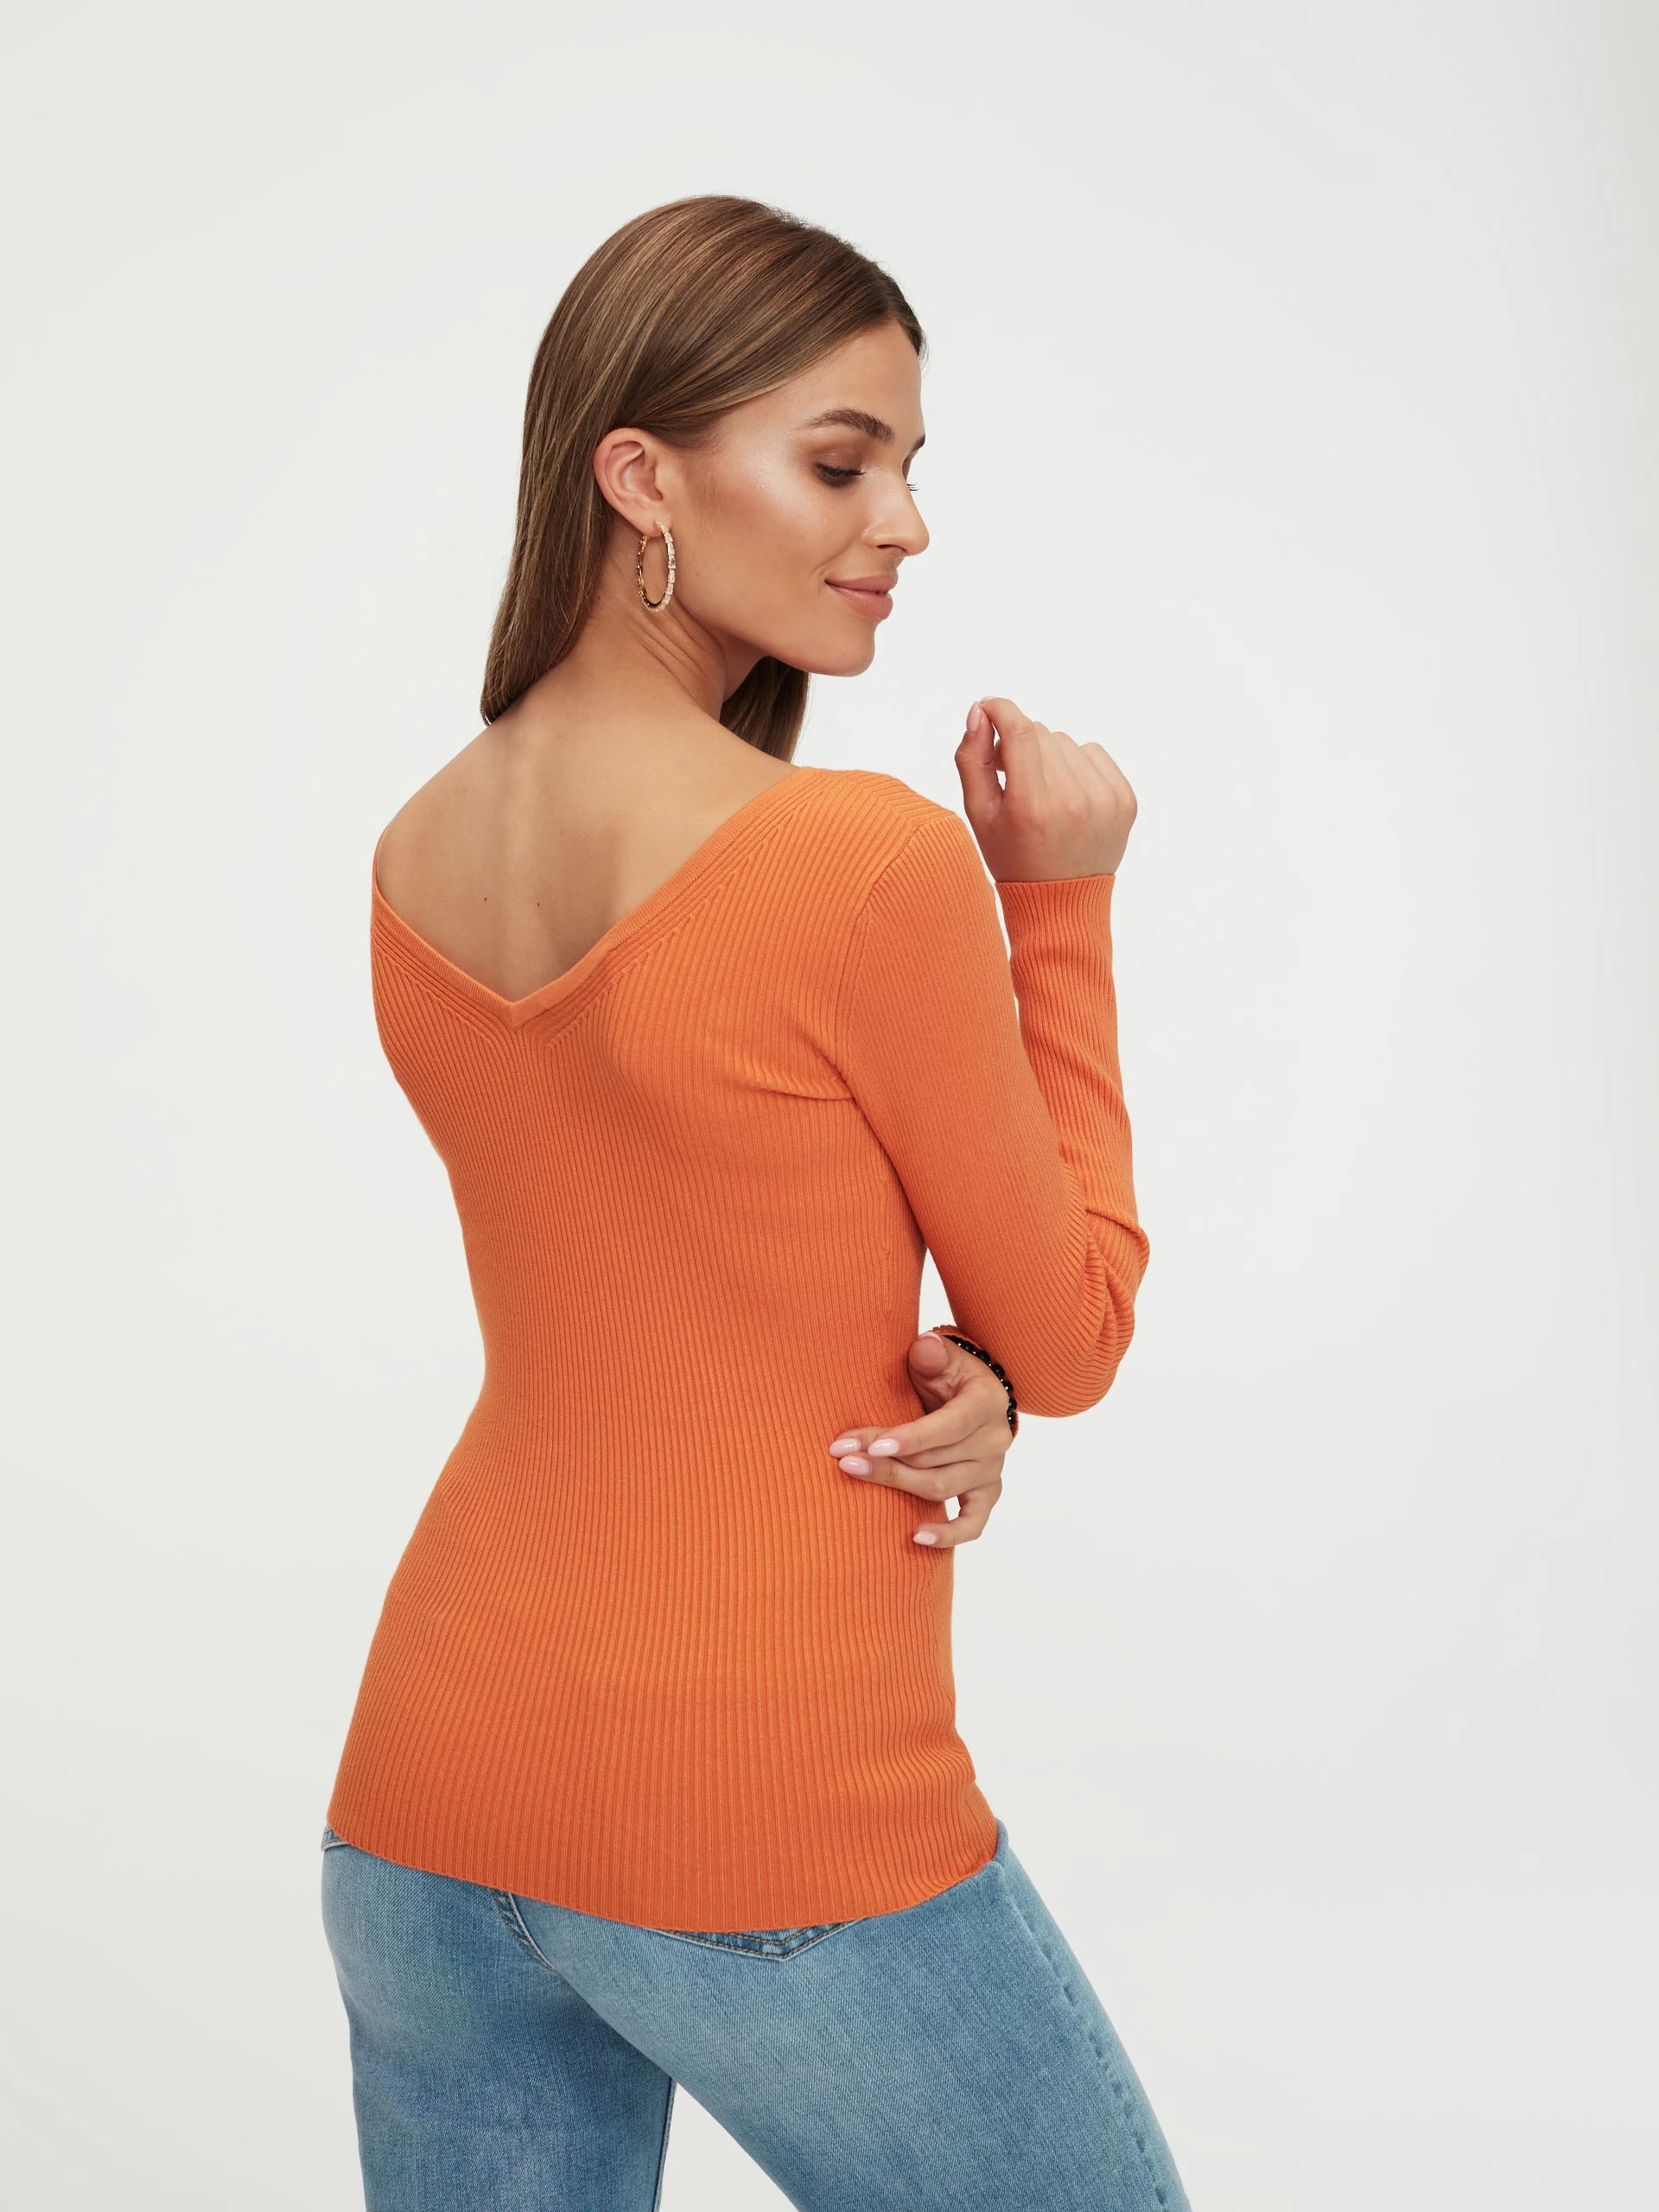 Orange knitted sweater